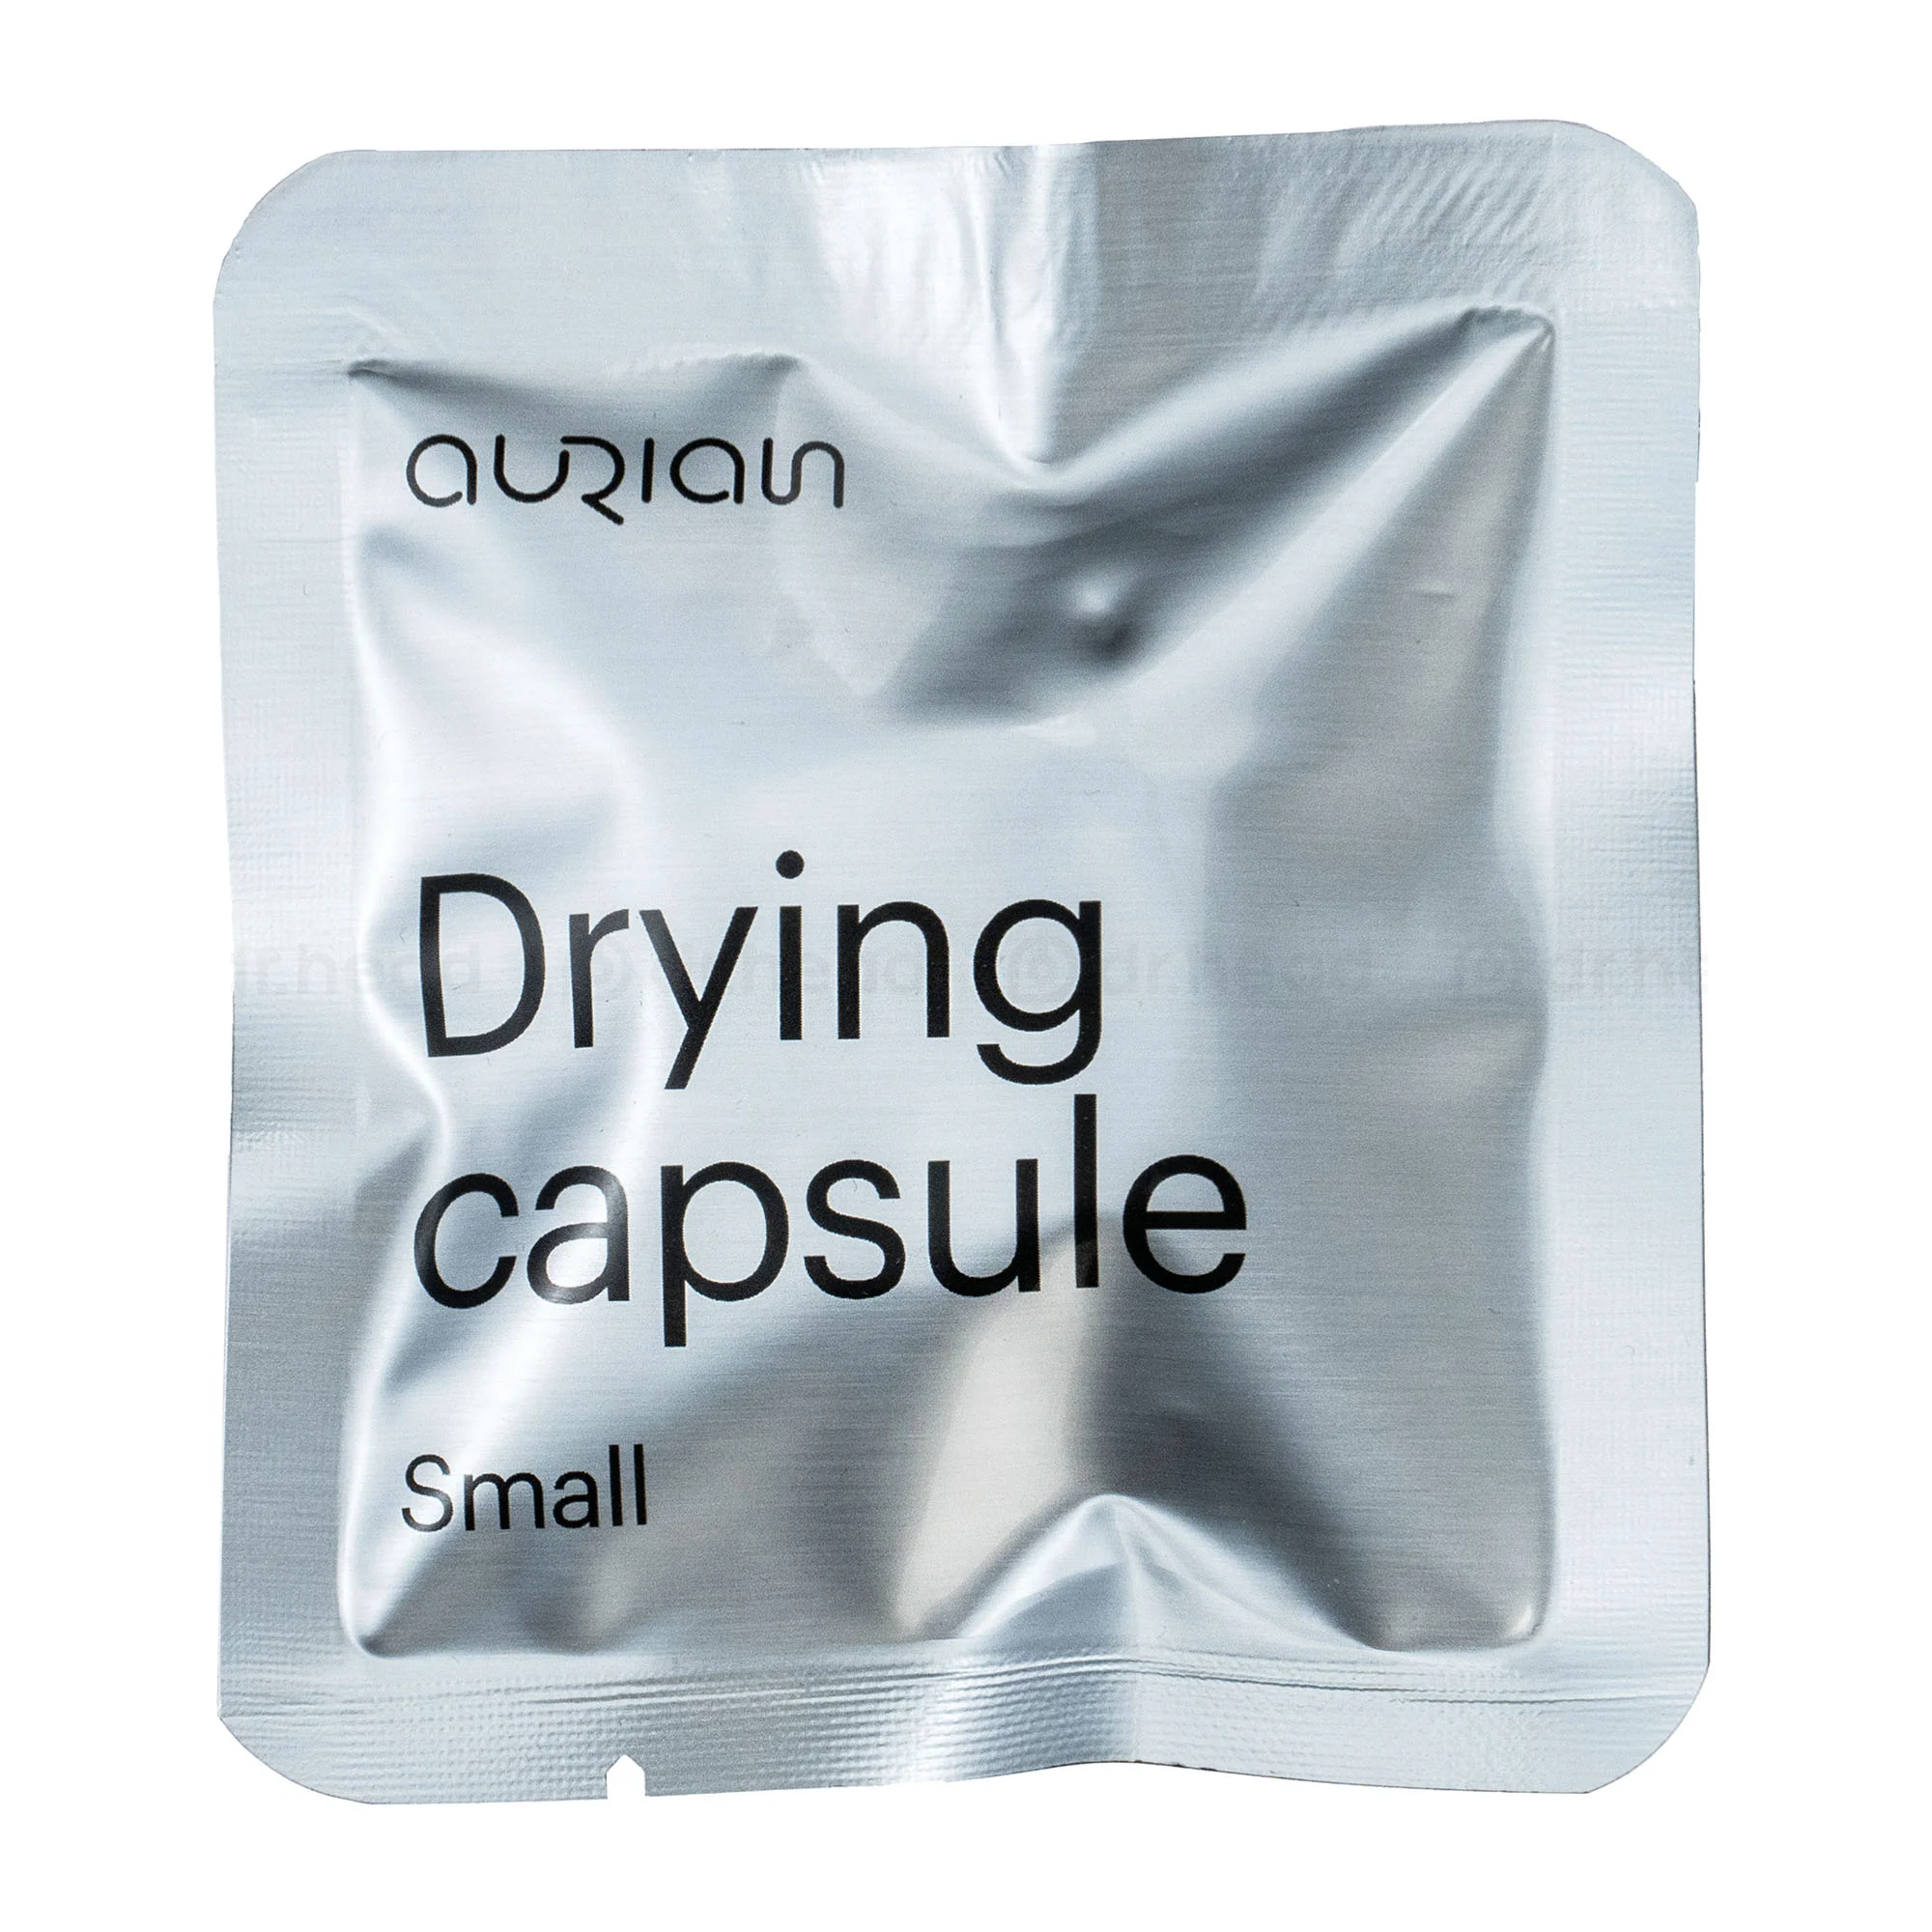 Aurian Drying capsule Small -абсорбент, шт